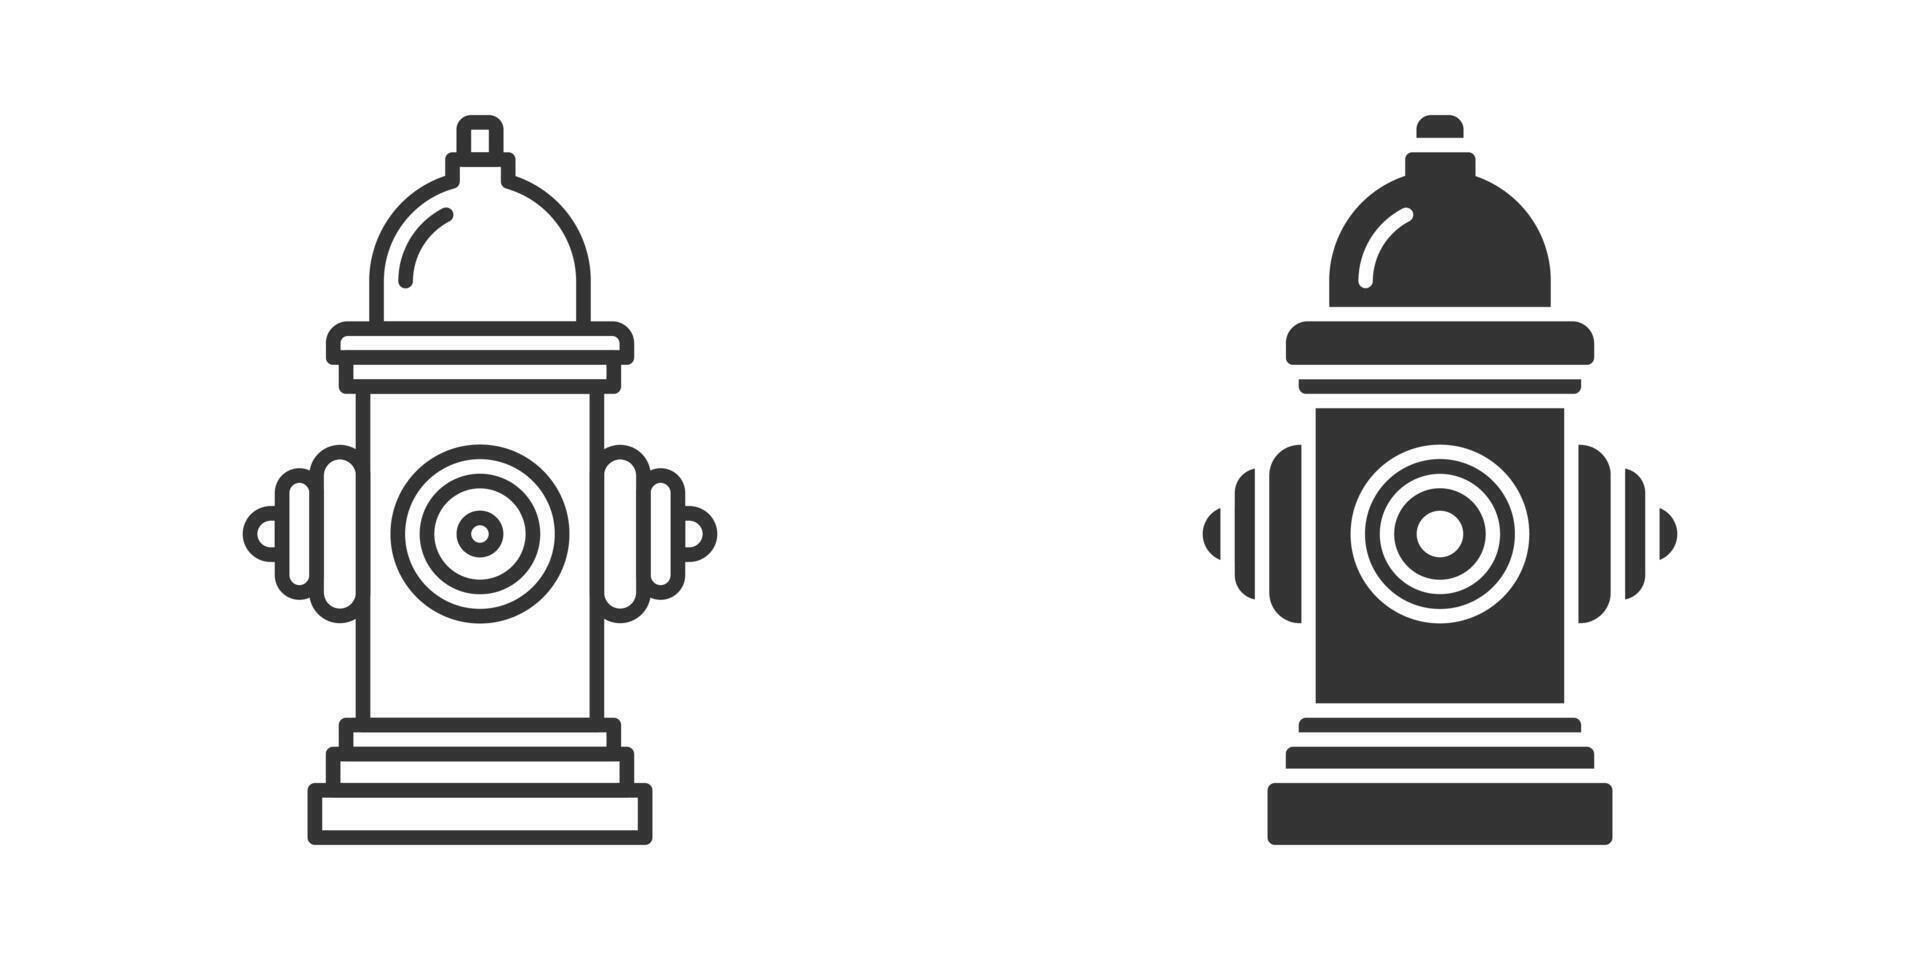 Fire hydrant icon. Vector illustration.